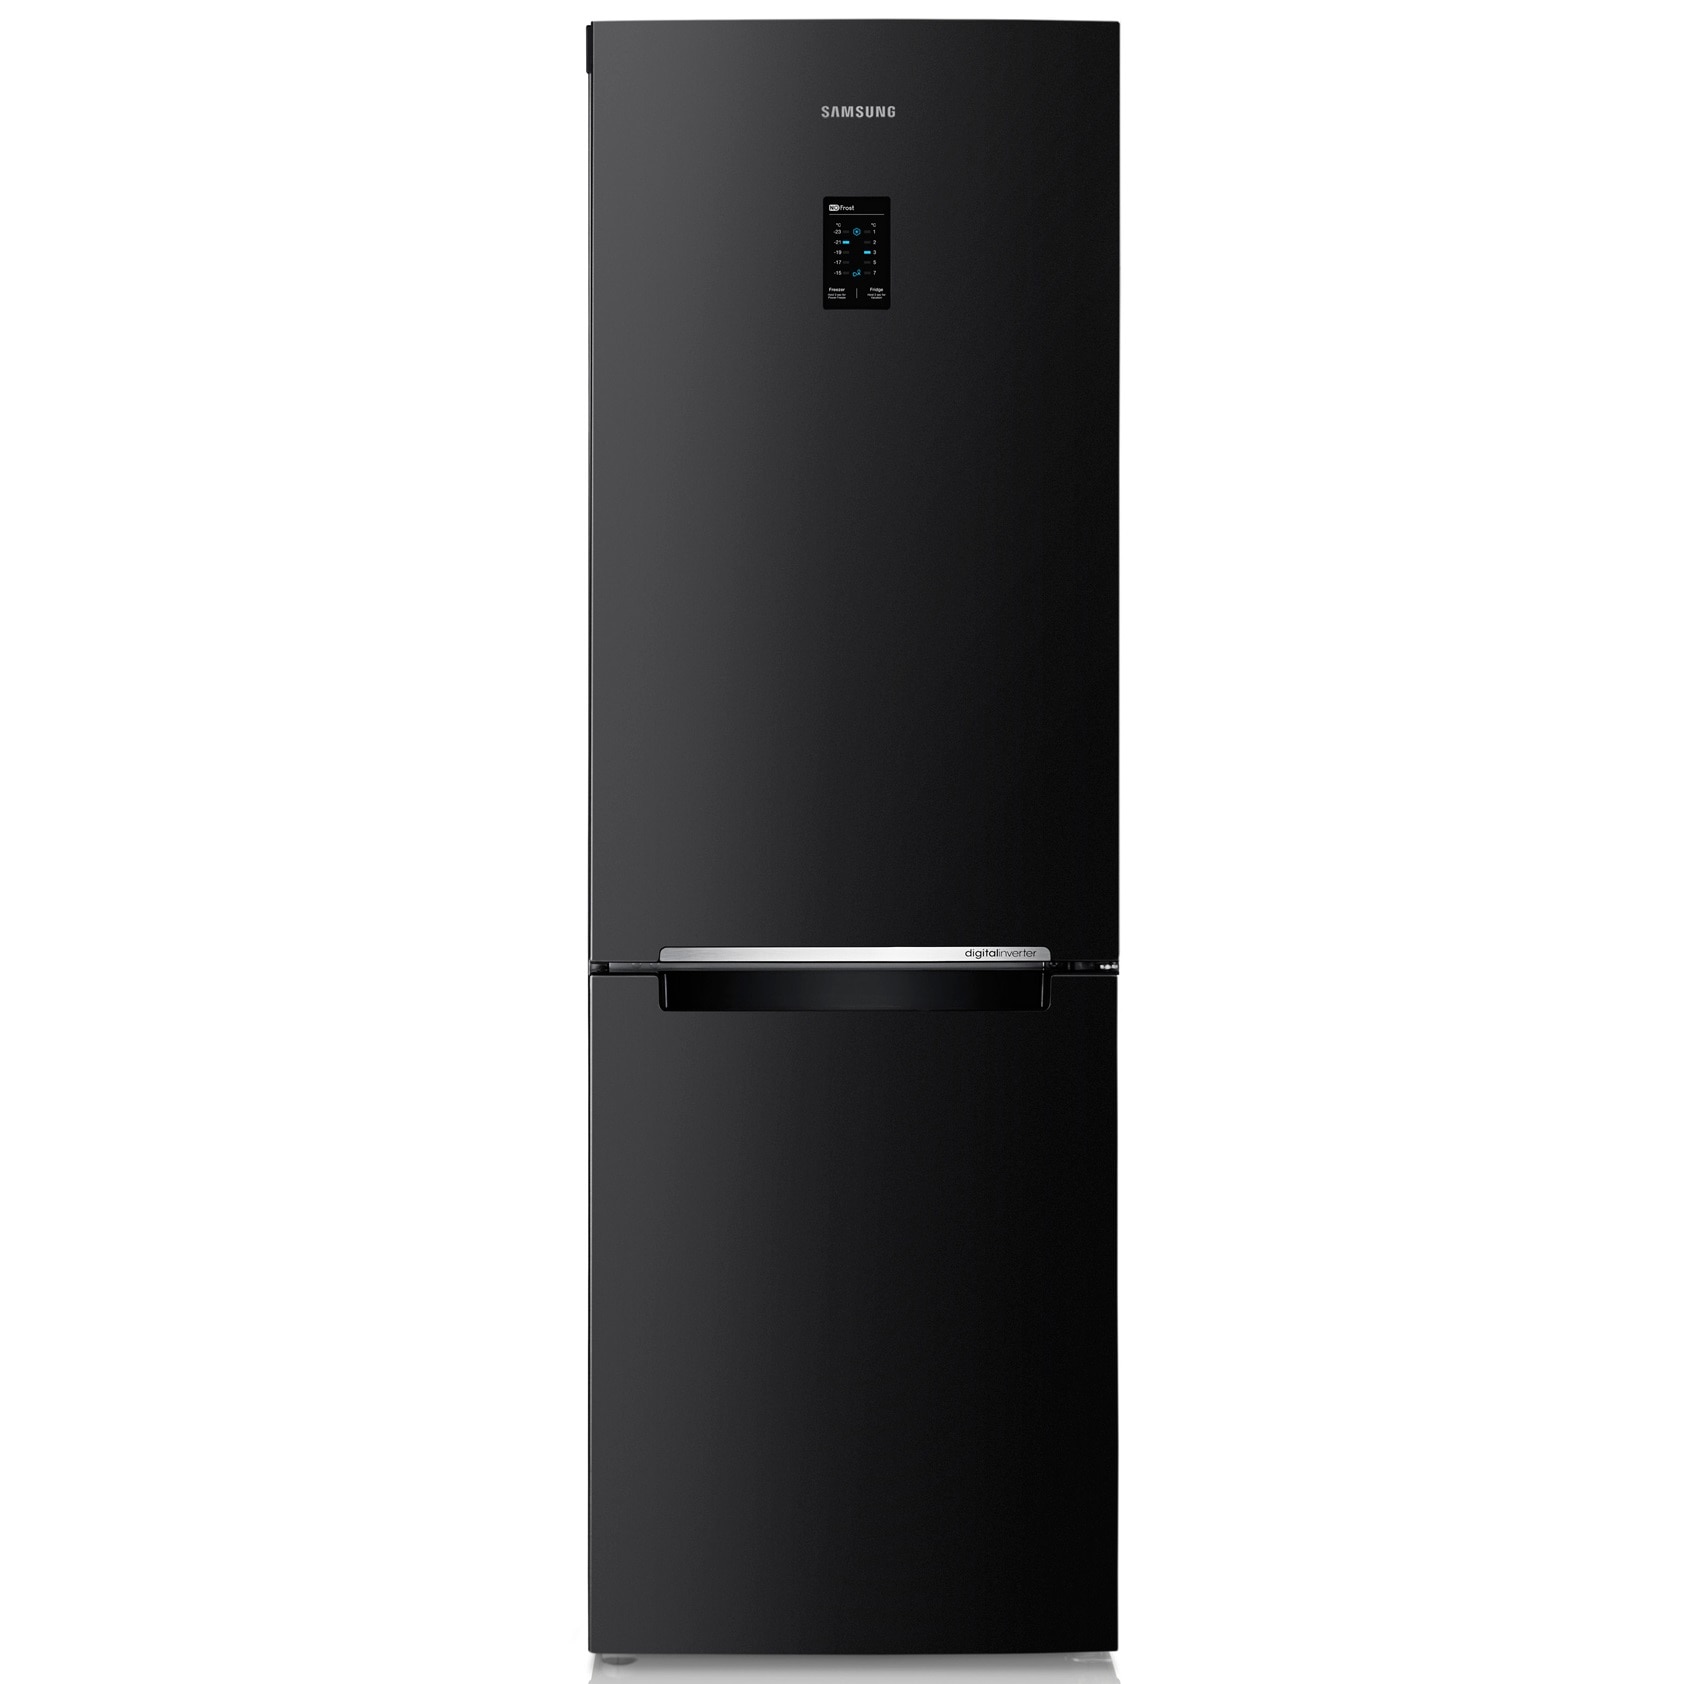 Хладилник Samsung RB31FERNDB с обем от 310 л.